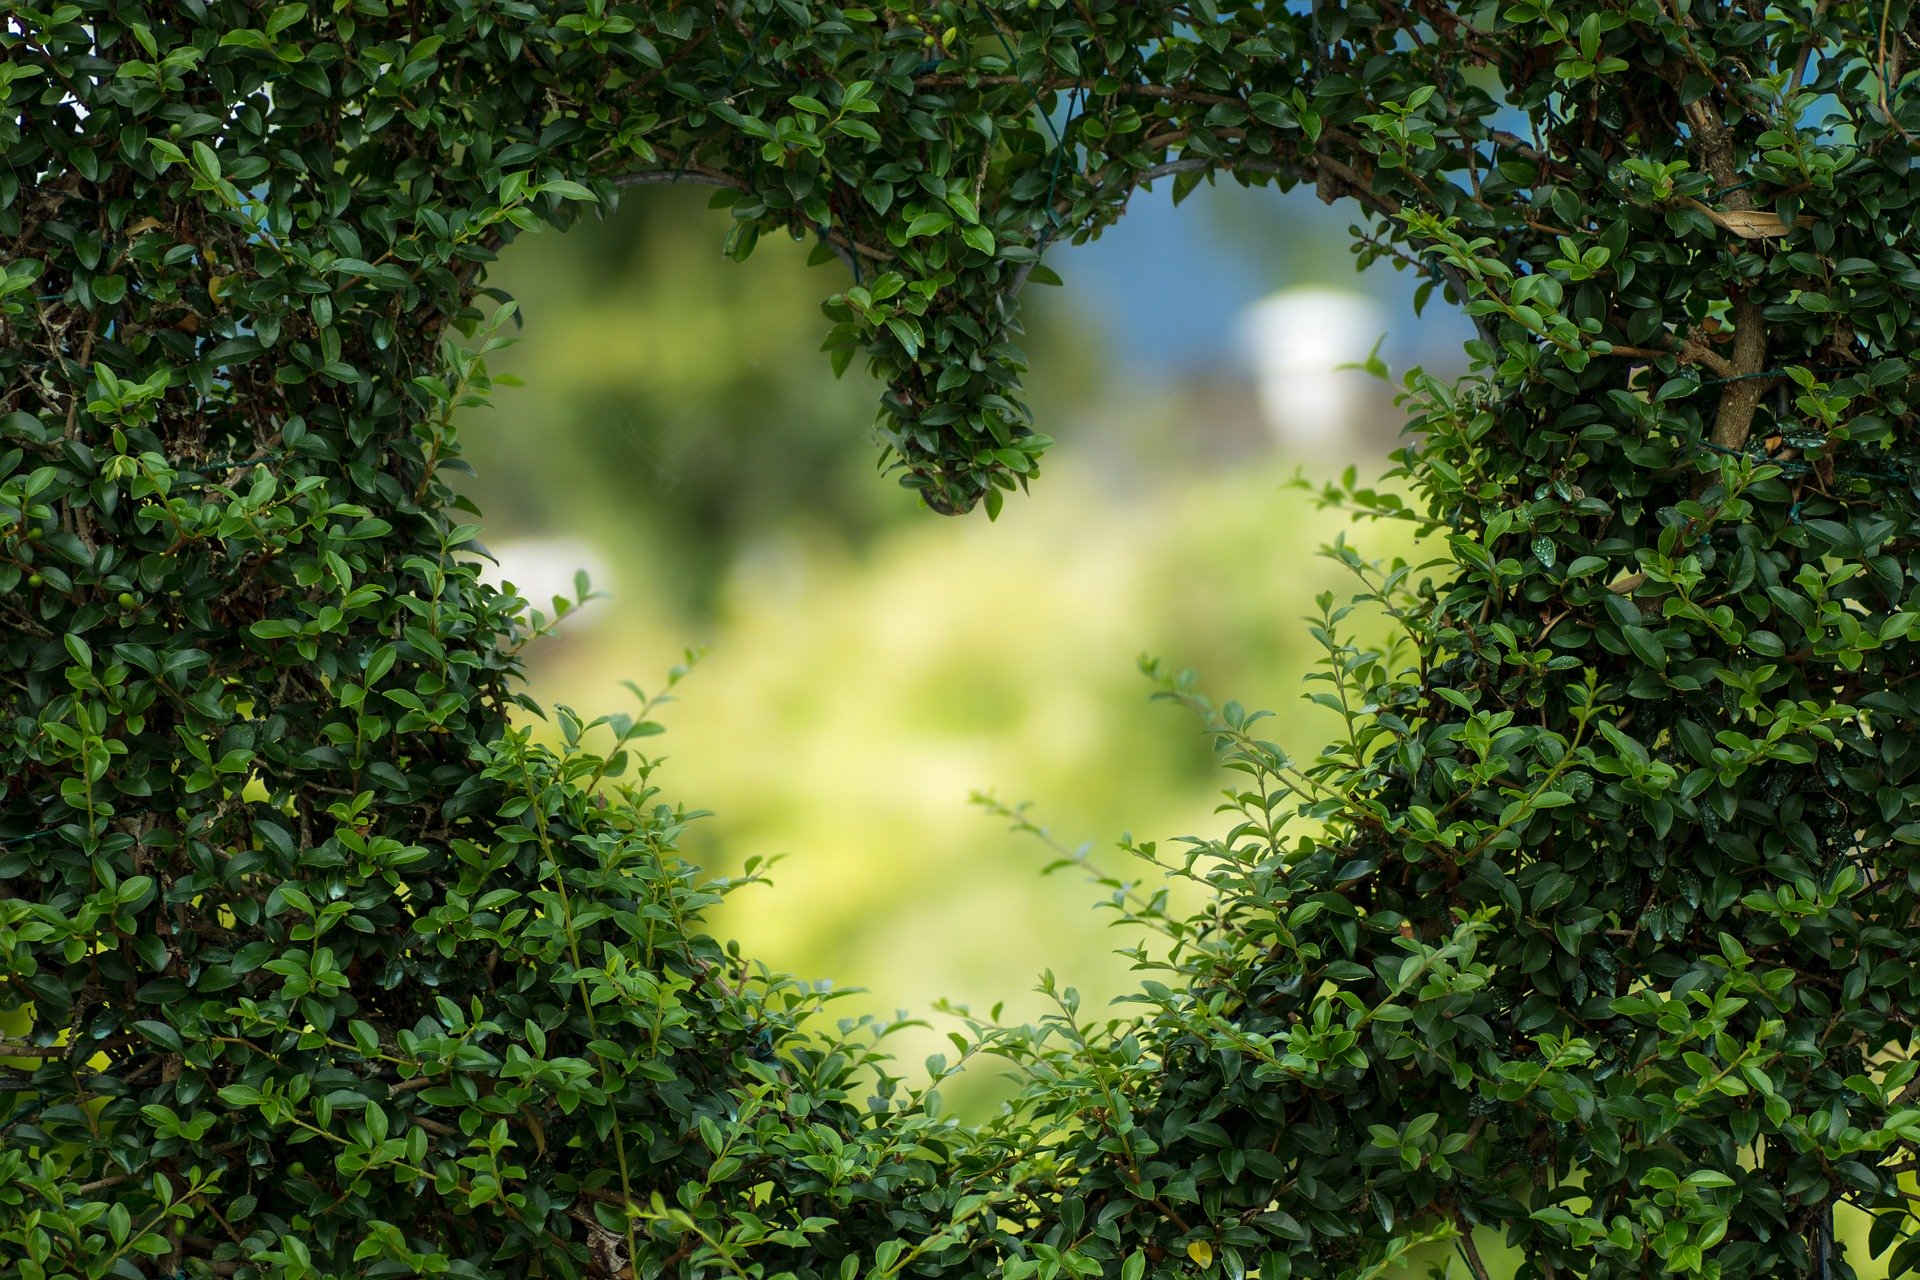 heart hedge, symbolizing Open mindfulness meditation in Ypsilanti, Saline, and Ann Arbor, MI.